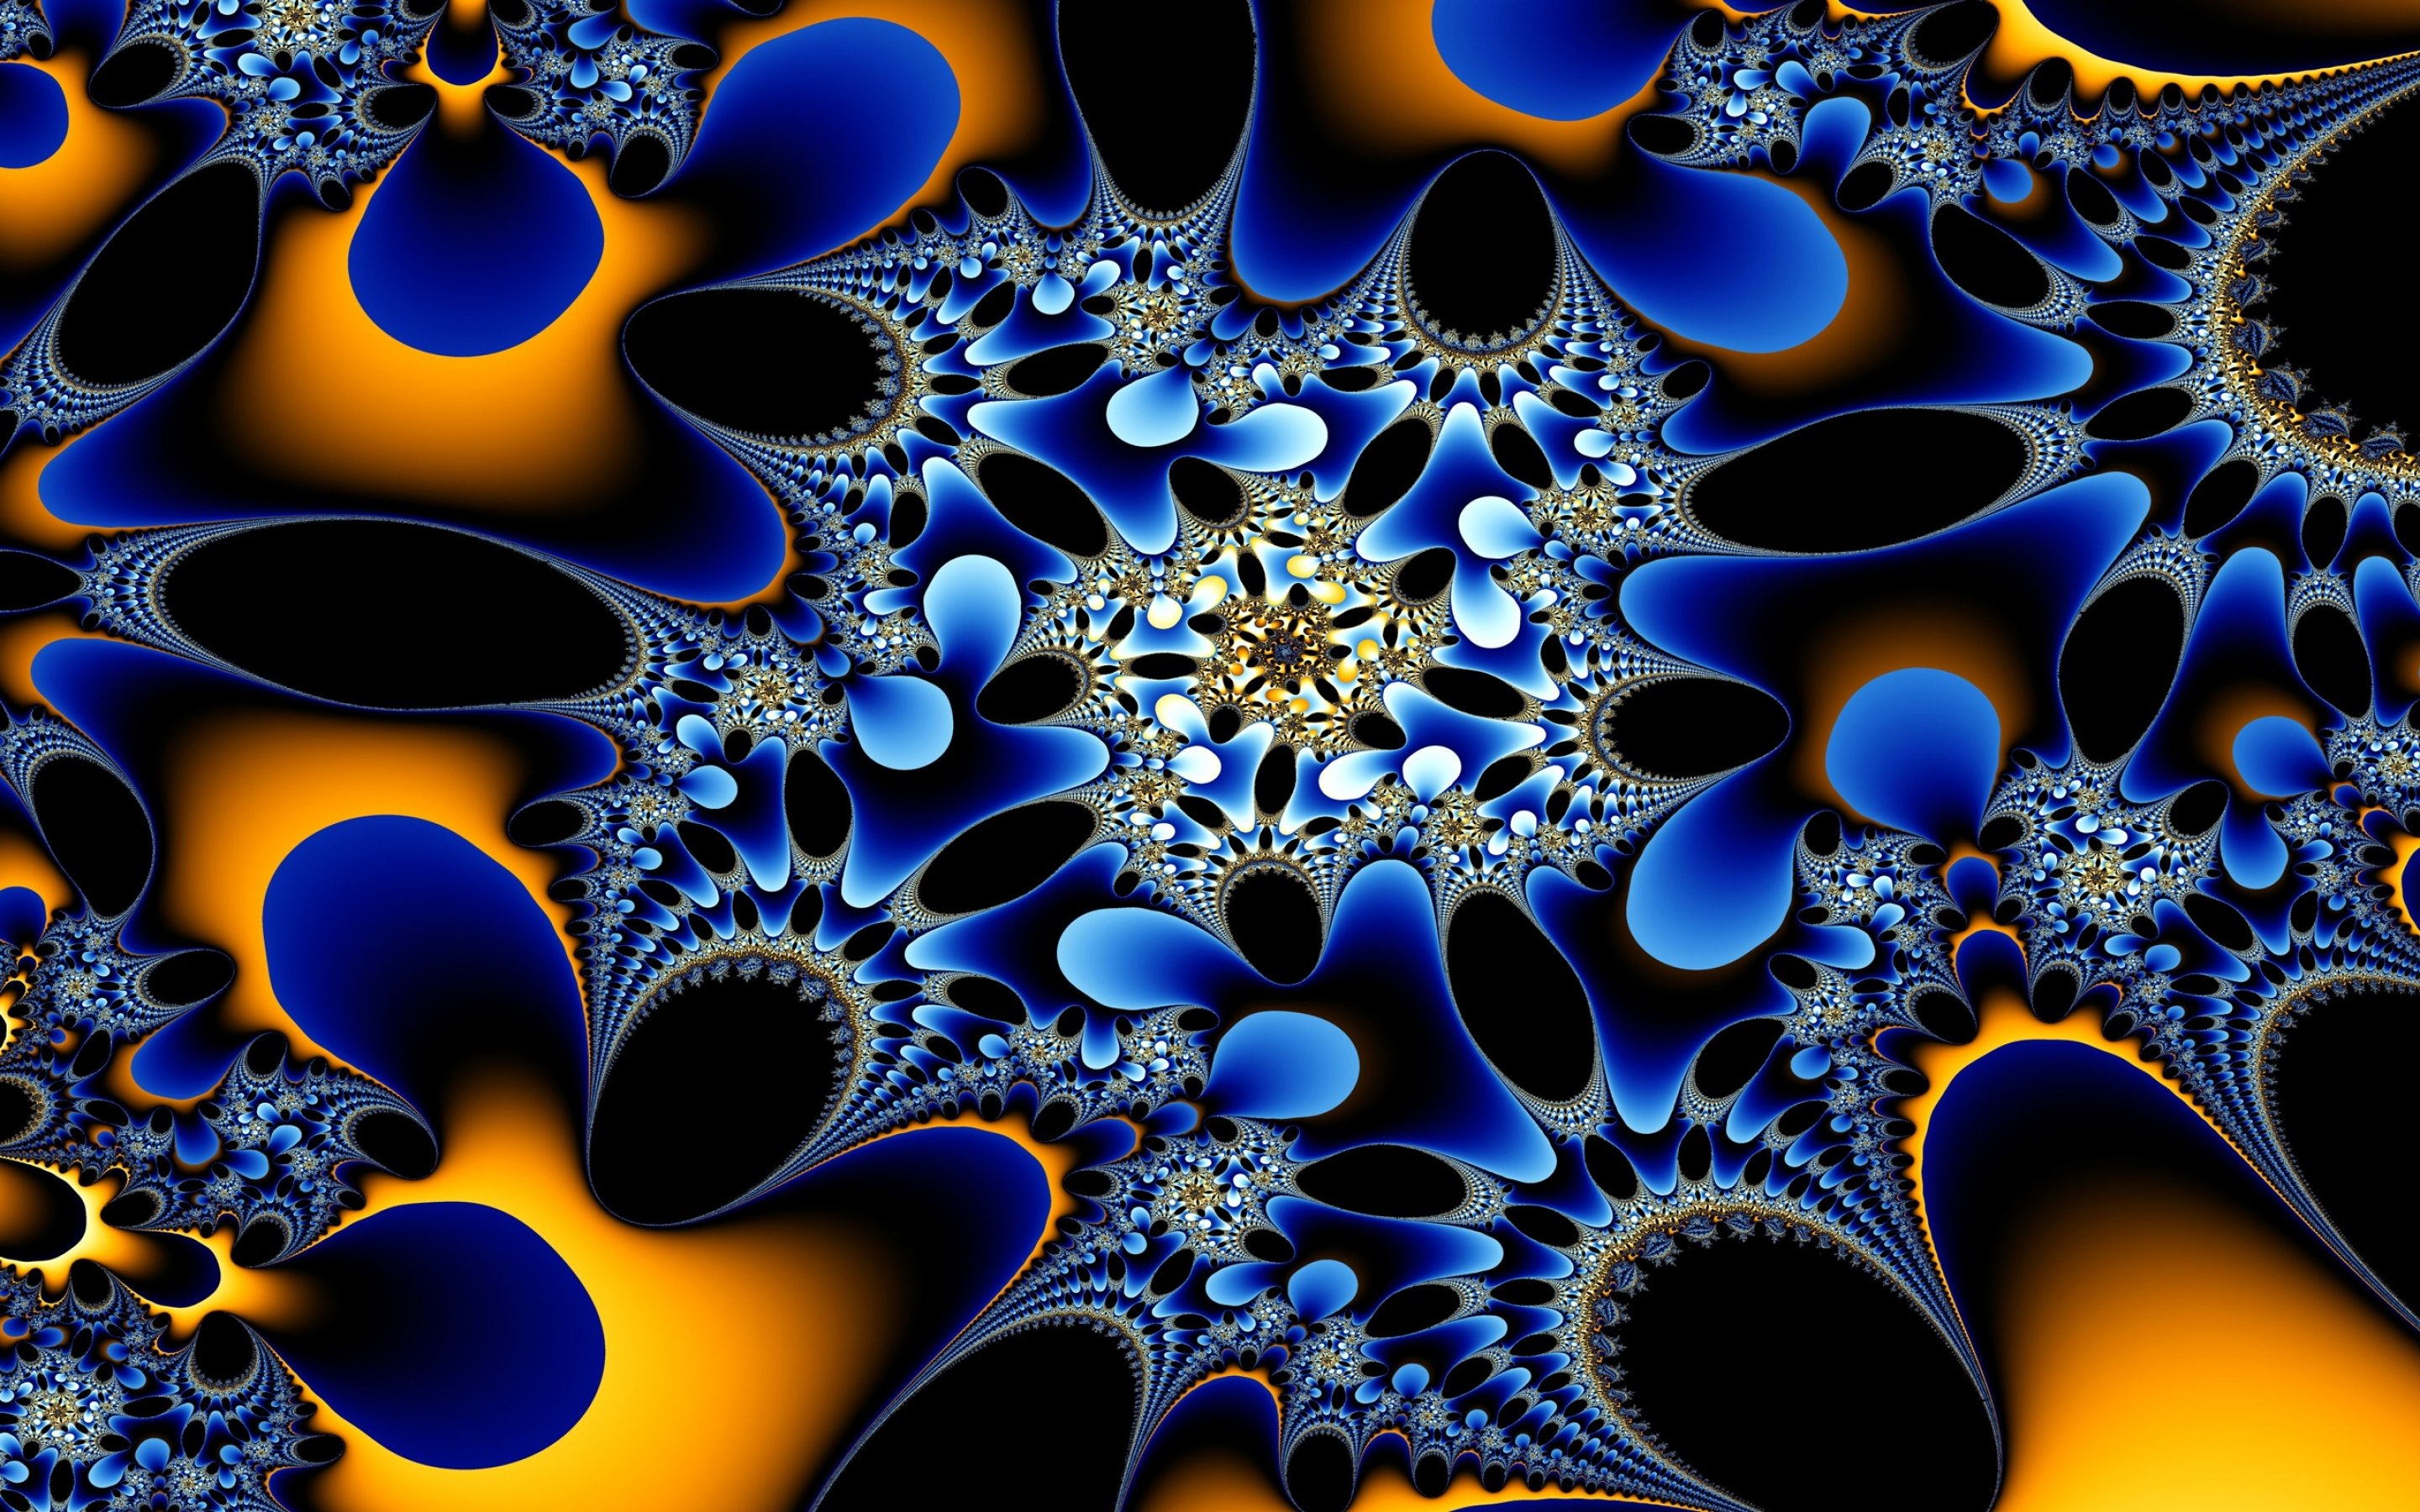 fractal design painter